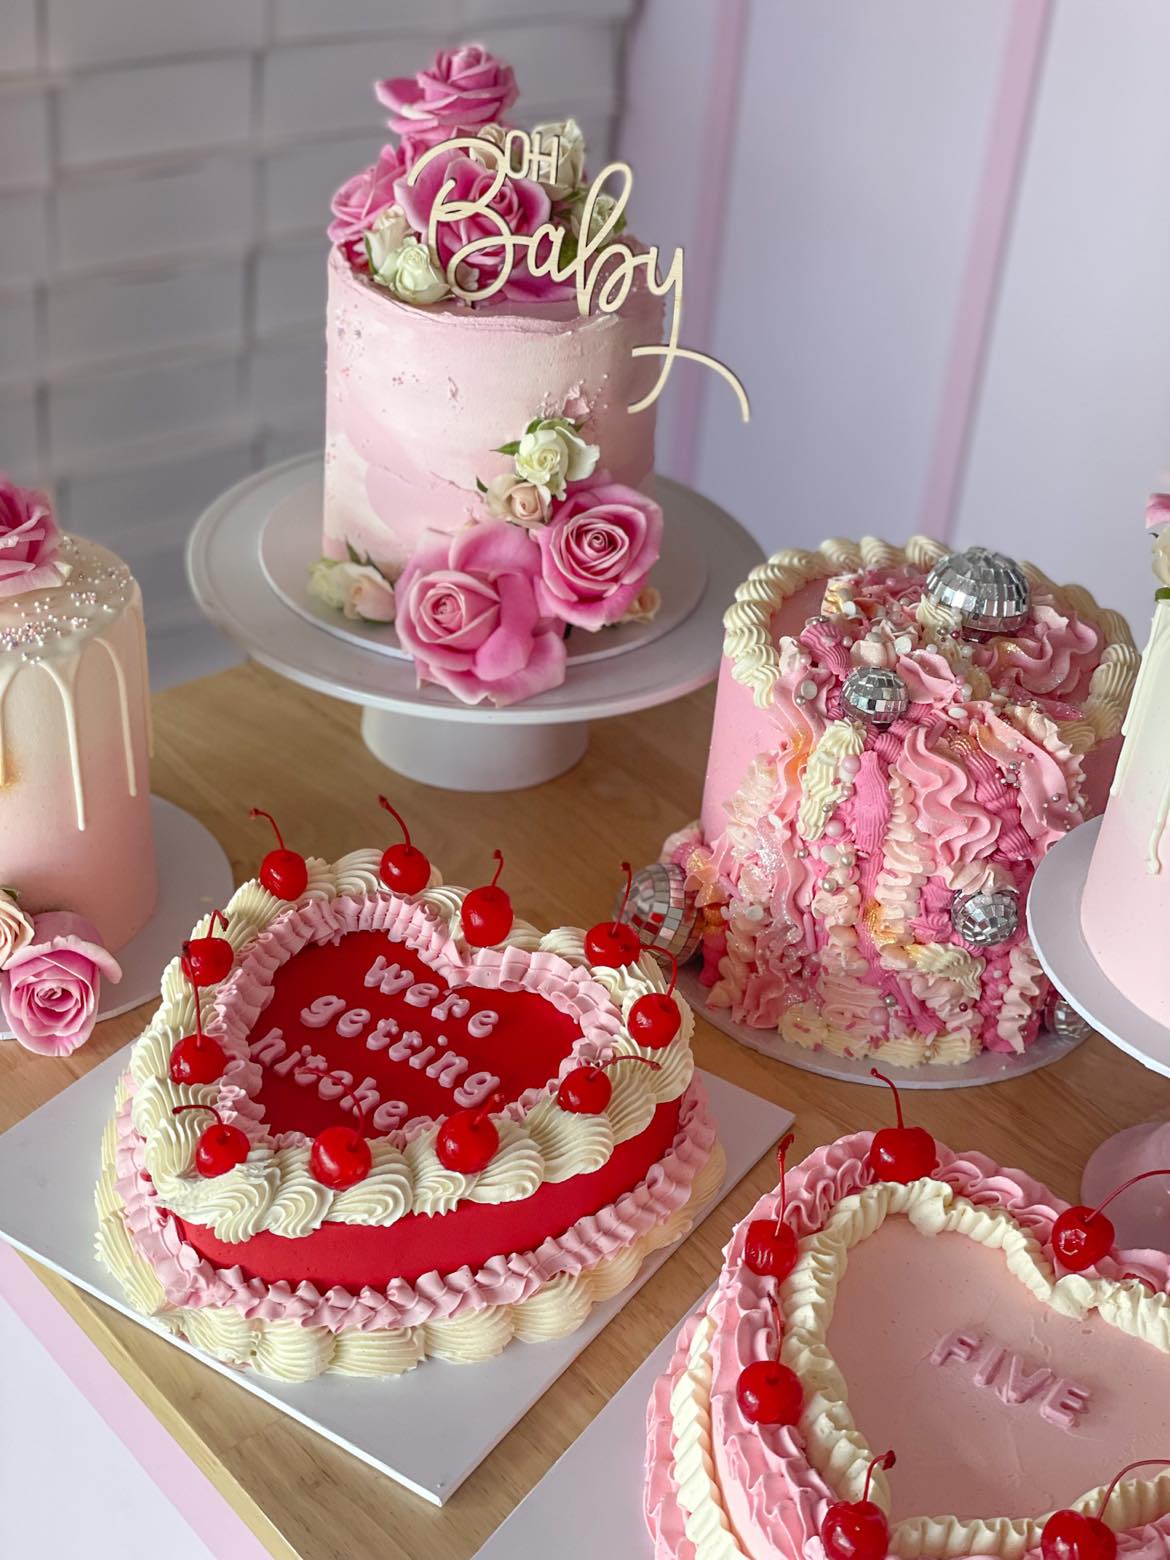 The Edna ❤️🍒 cherry on top - custom message heart cake